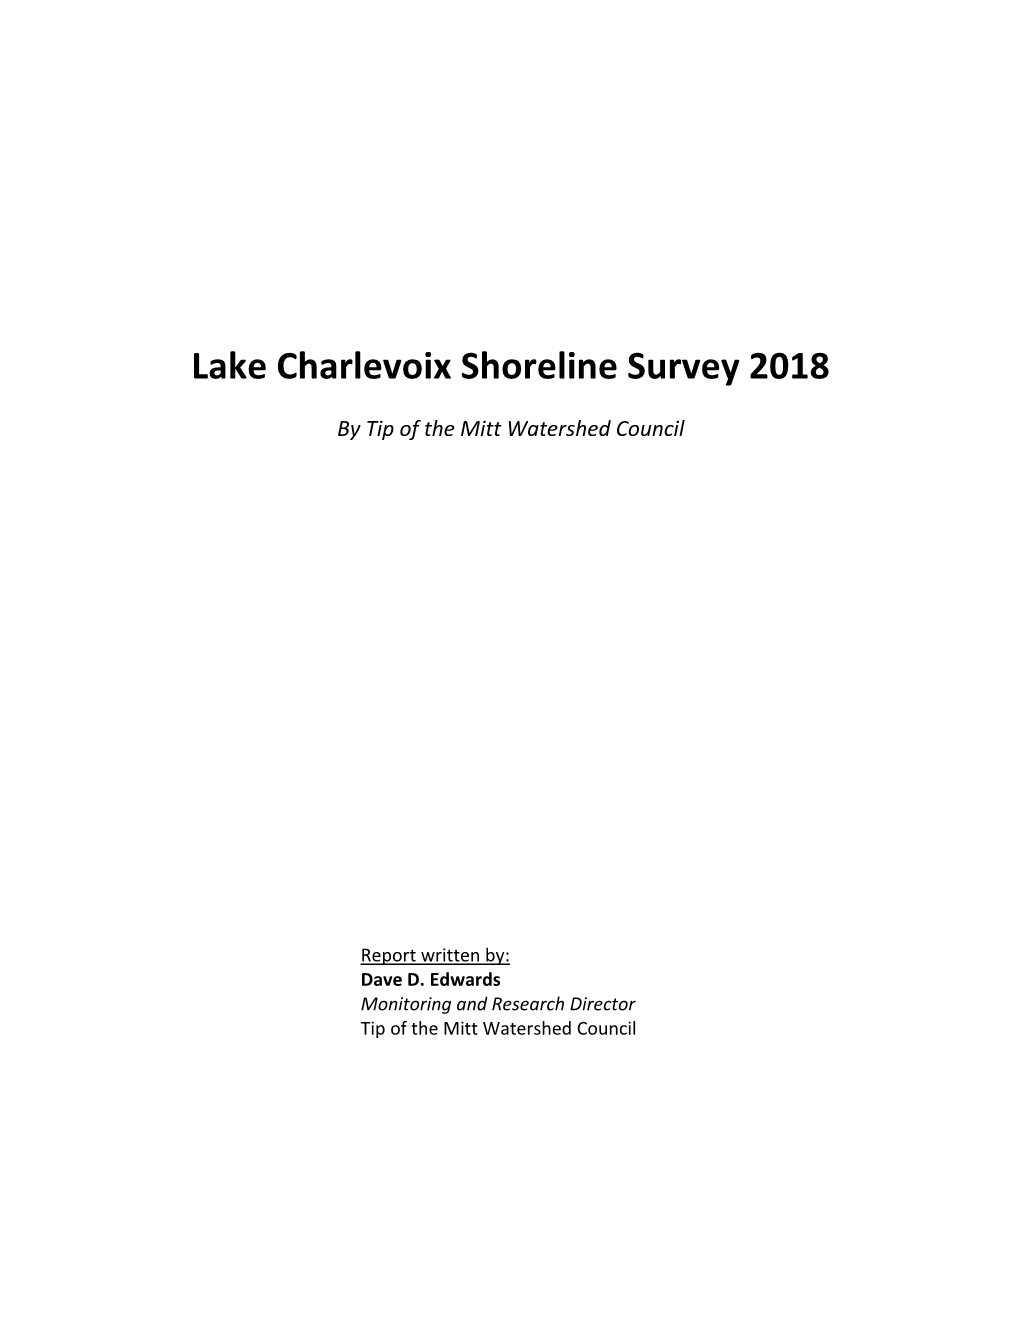 Lake Charlevoix Shoreline Survey Report